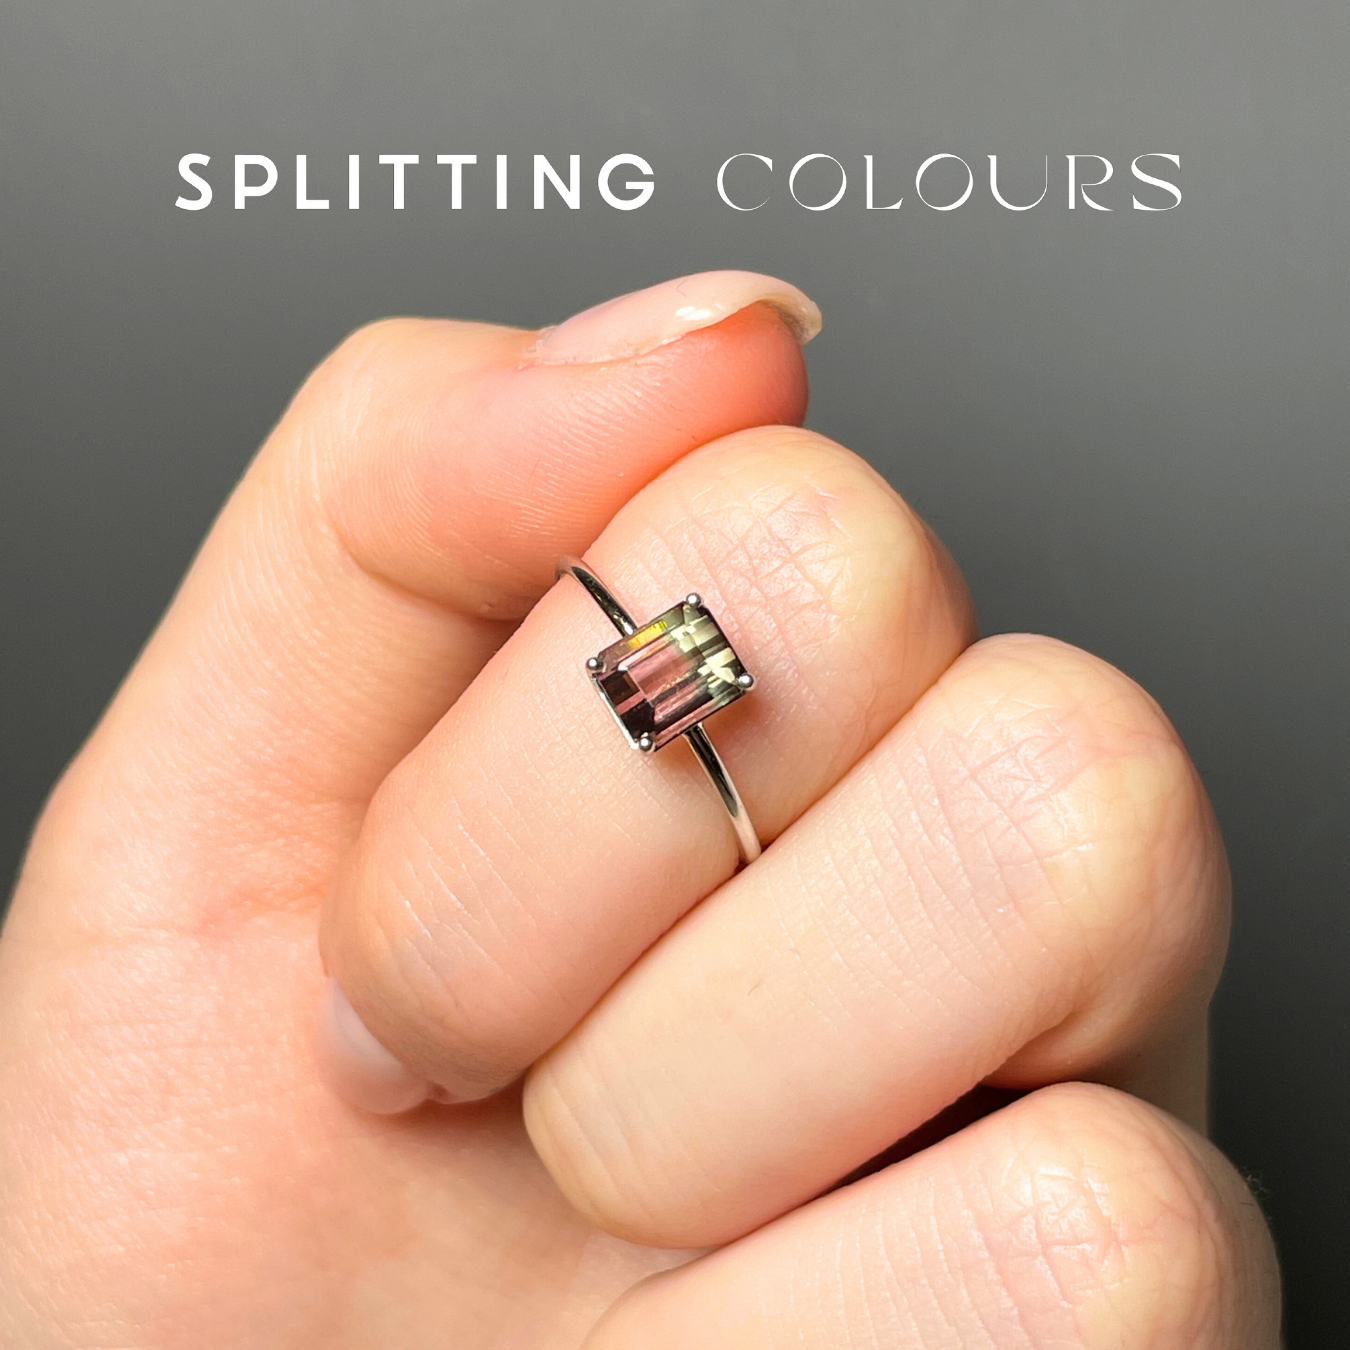 The Petite Ring - 1.35ct Peachy Pink & Granite Green Tourmaline